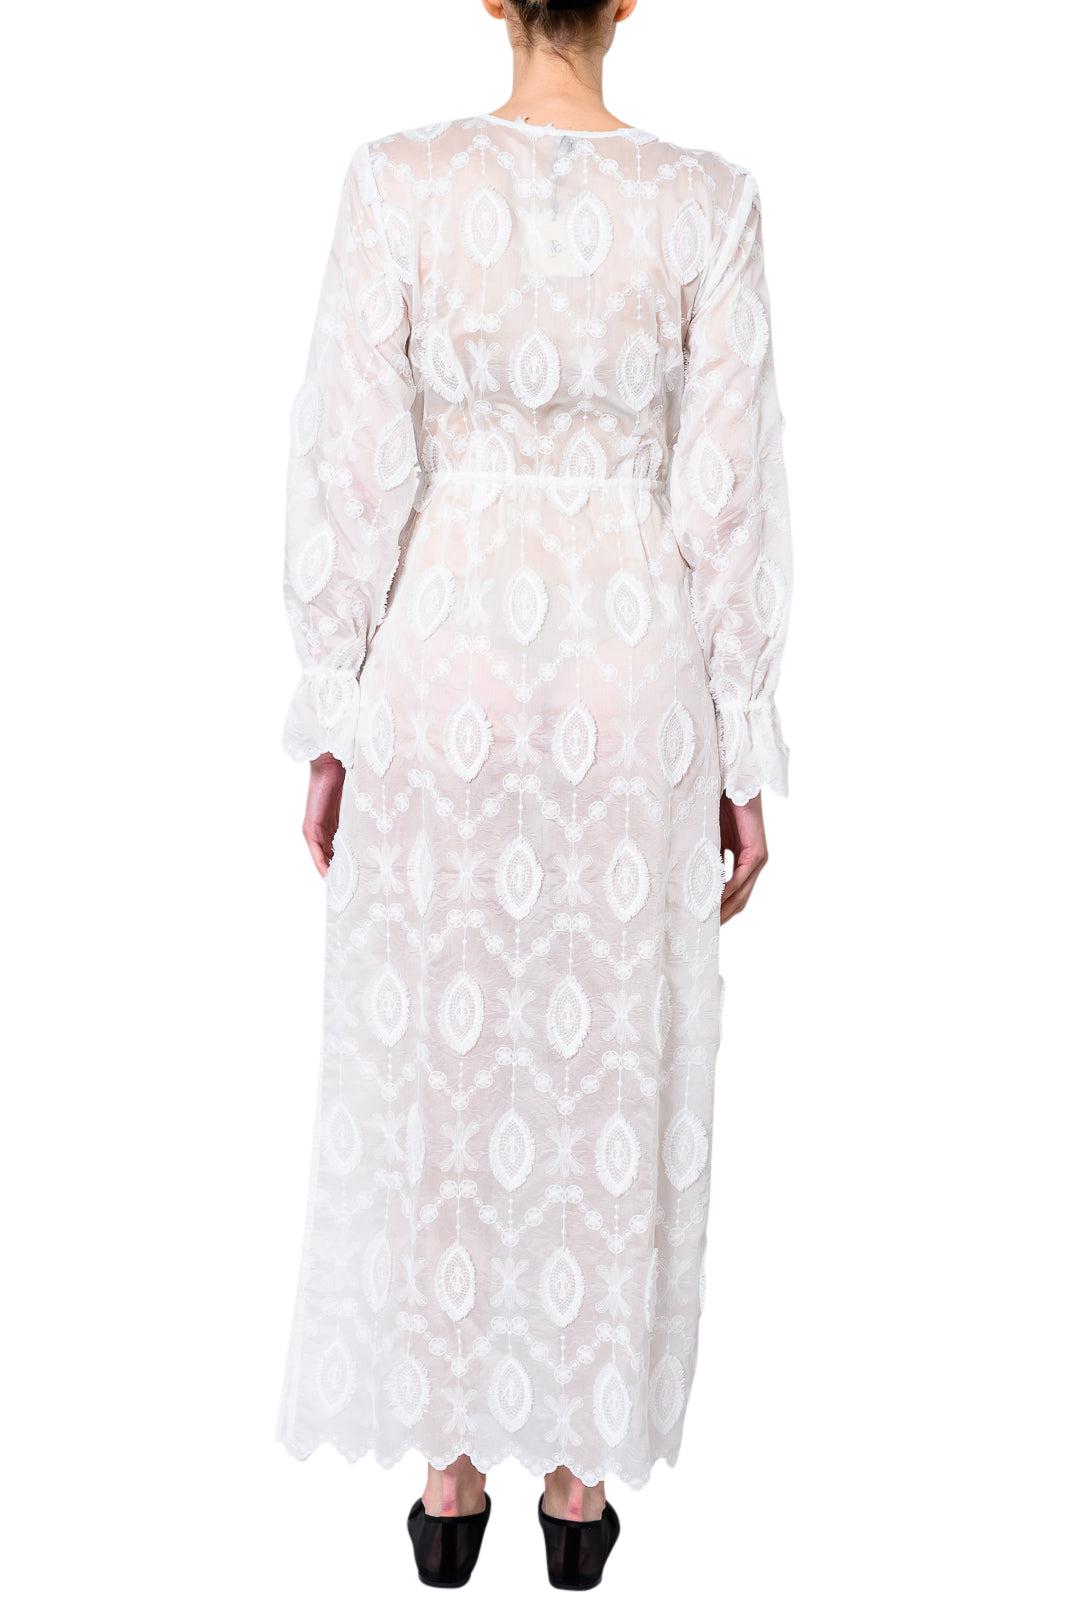 The Garment-Afrodite Wrap Dress-20249-dgallerystore